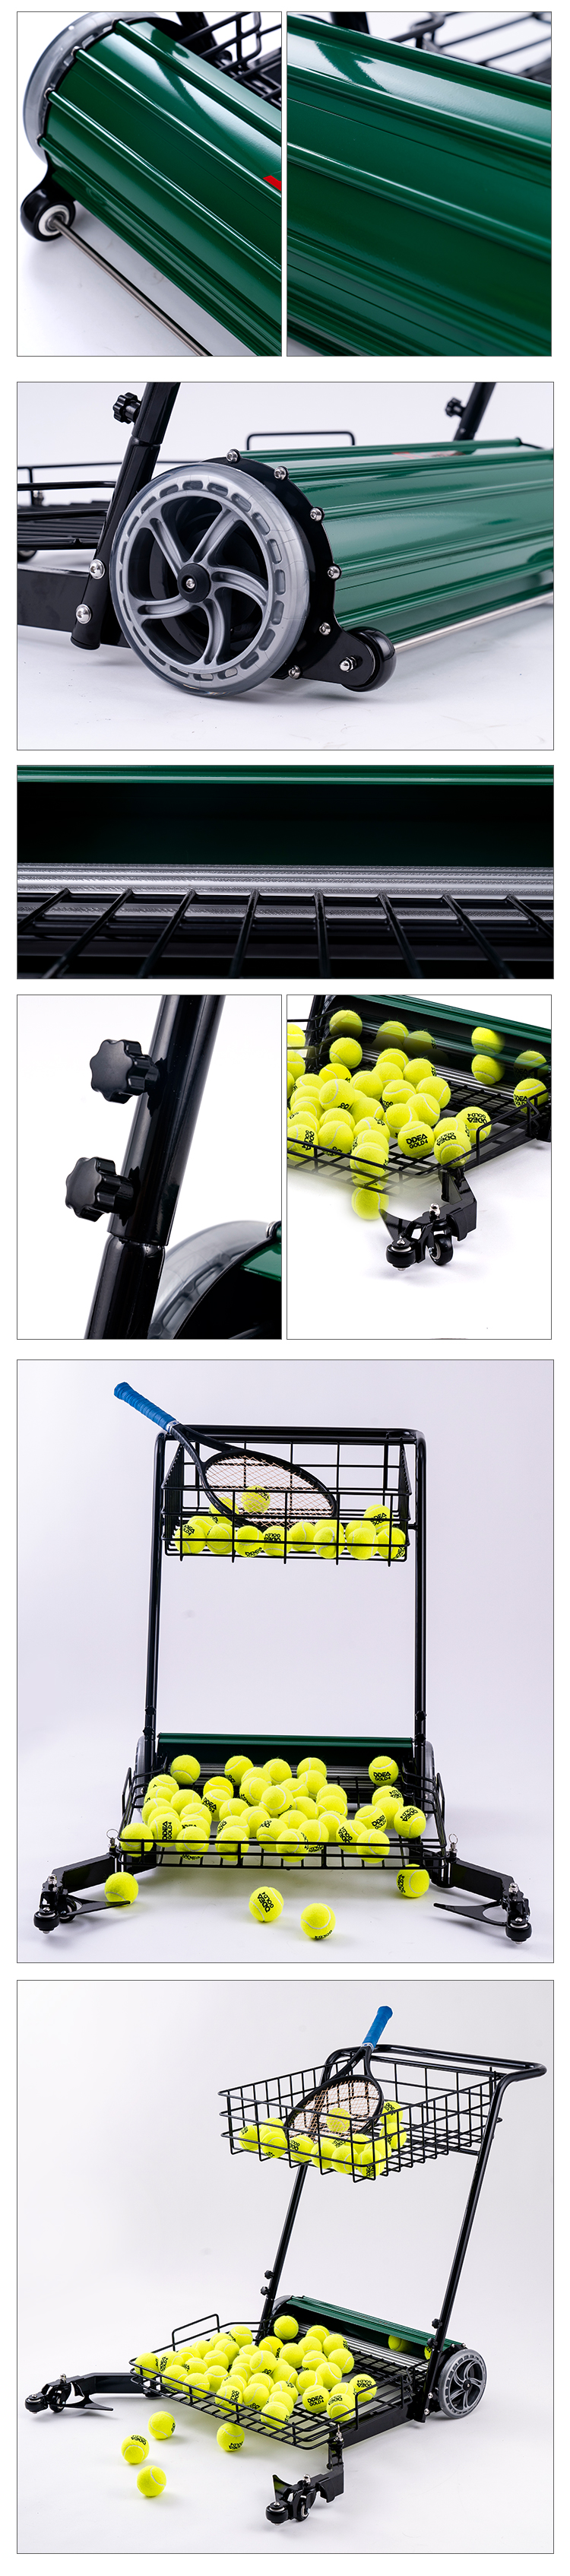 Tennis Sammelmaschinn (7)